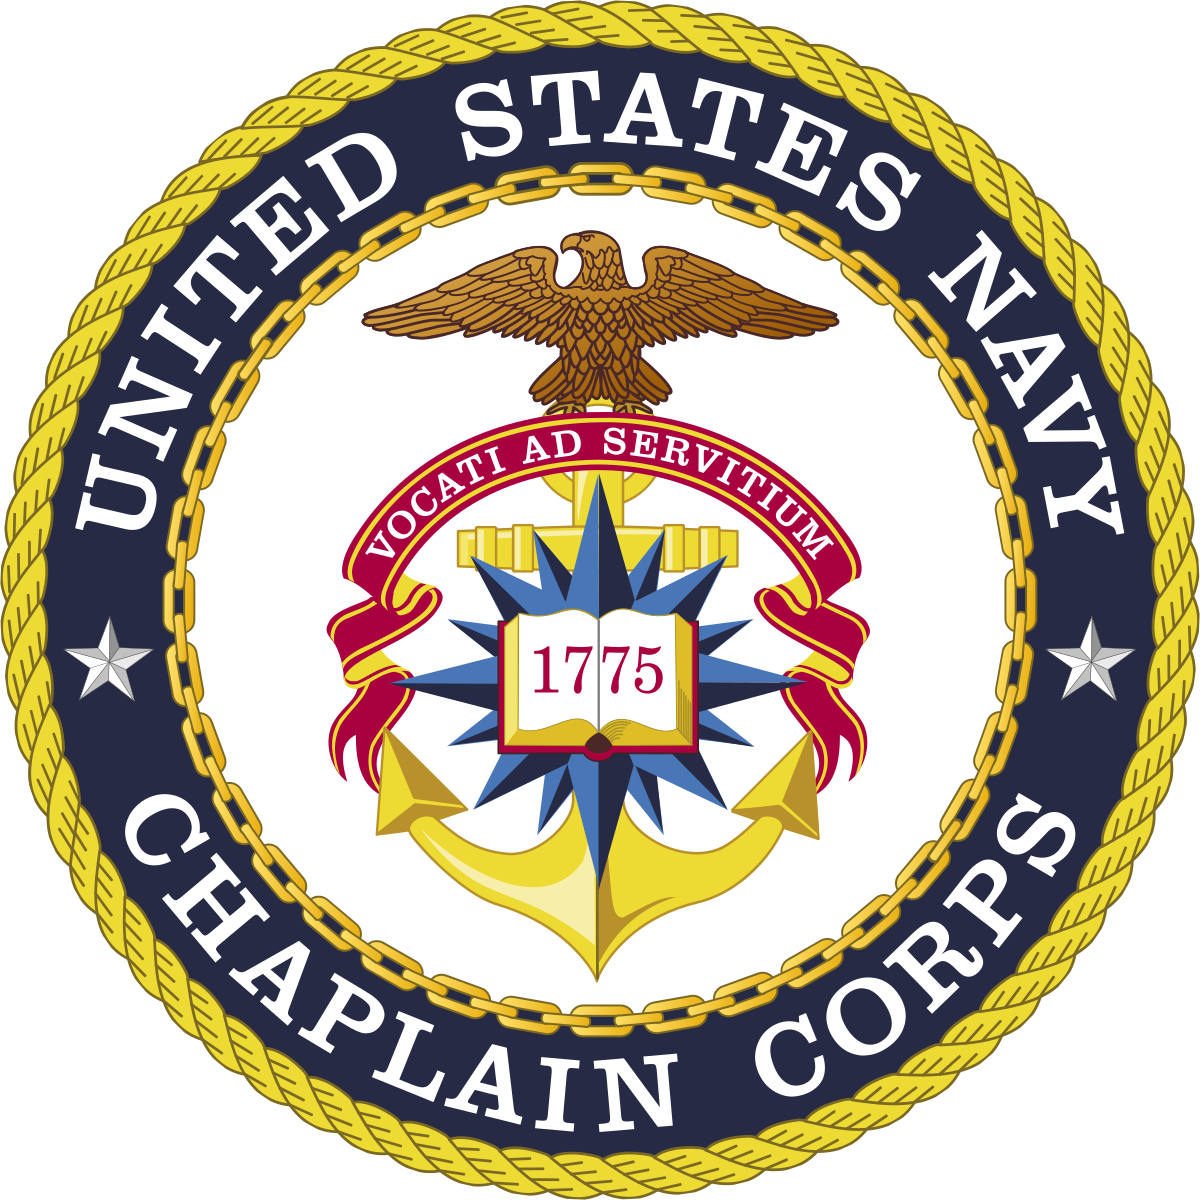 United States Marine Corps - United States Navy Chaplain Corps (1200x1200)